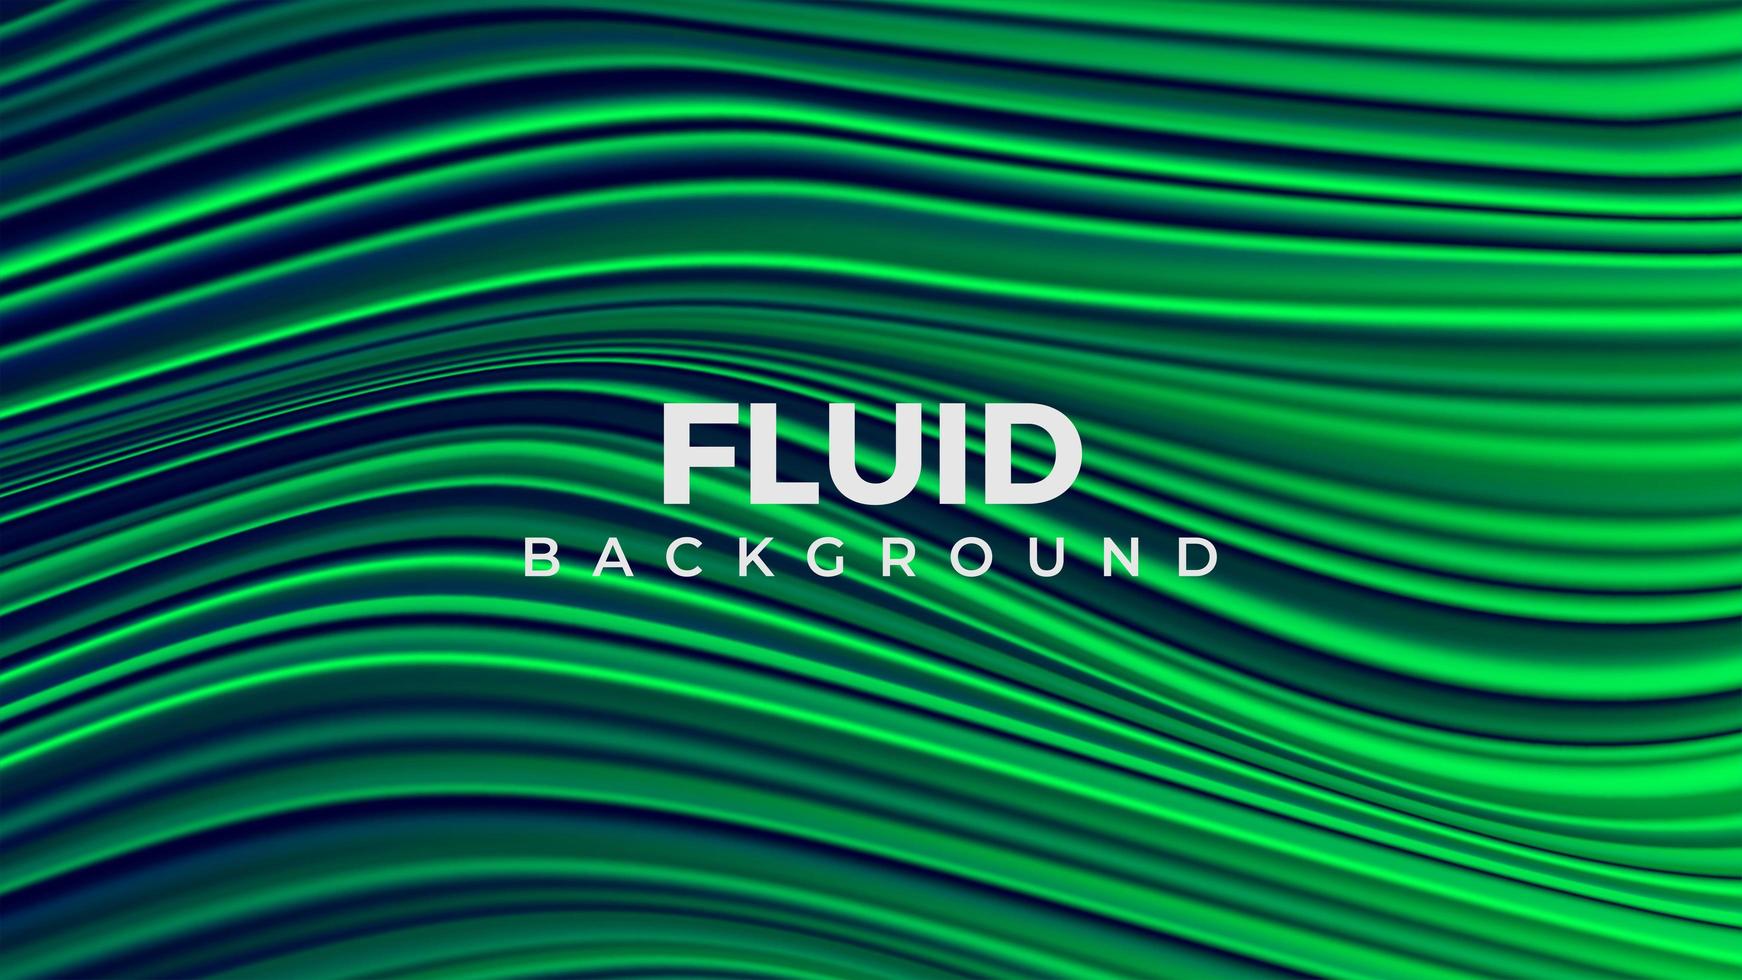 Beautiful 3d green liquid background image. vector